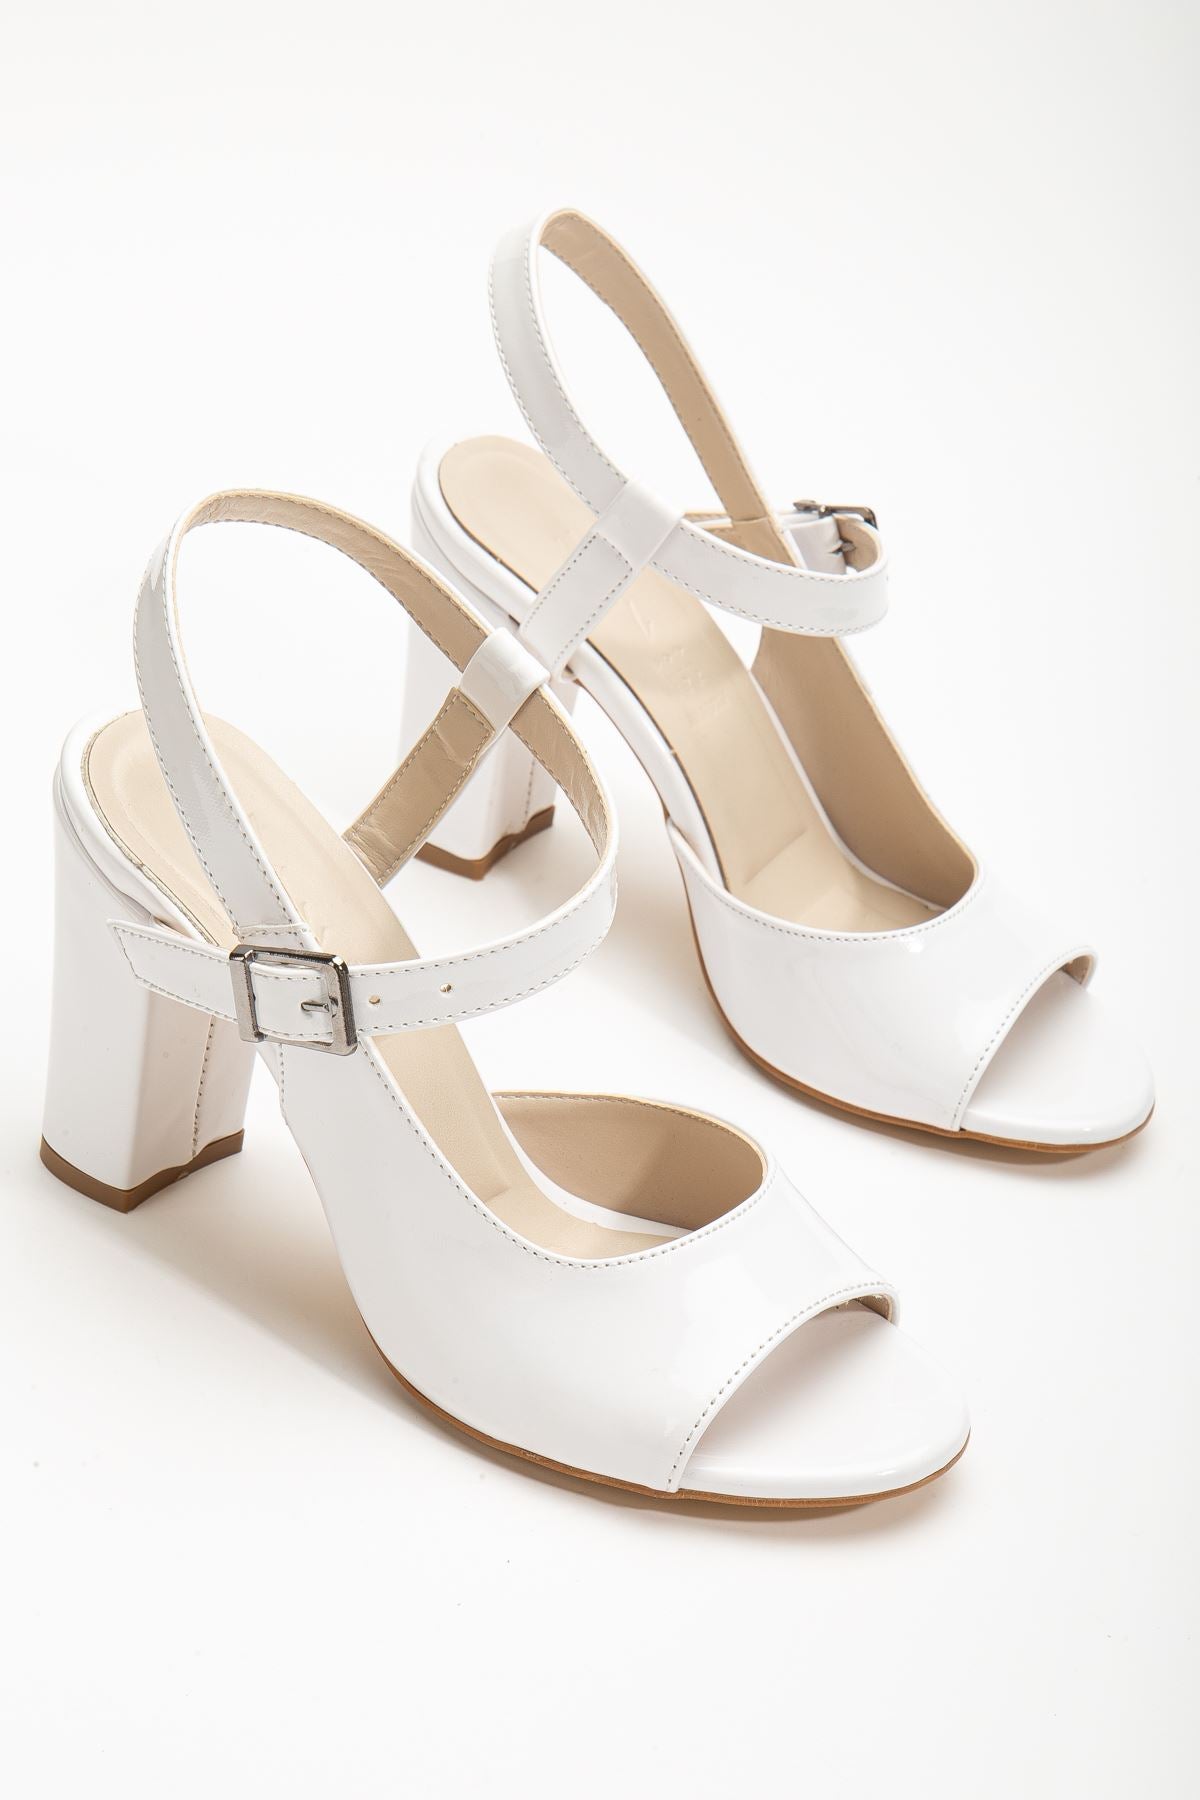 Lovisa Heeled White Patent Leather Women's Shoes - STREETMODE ™